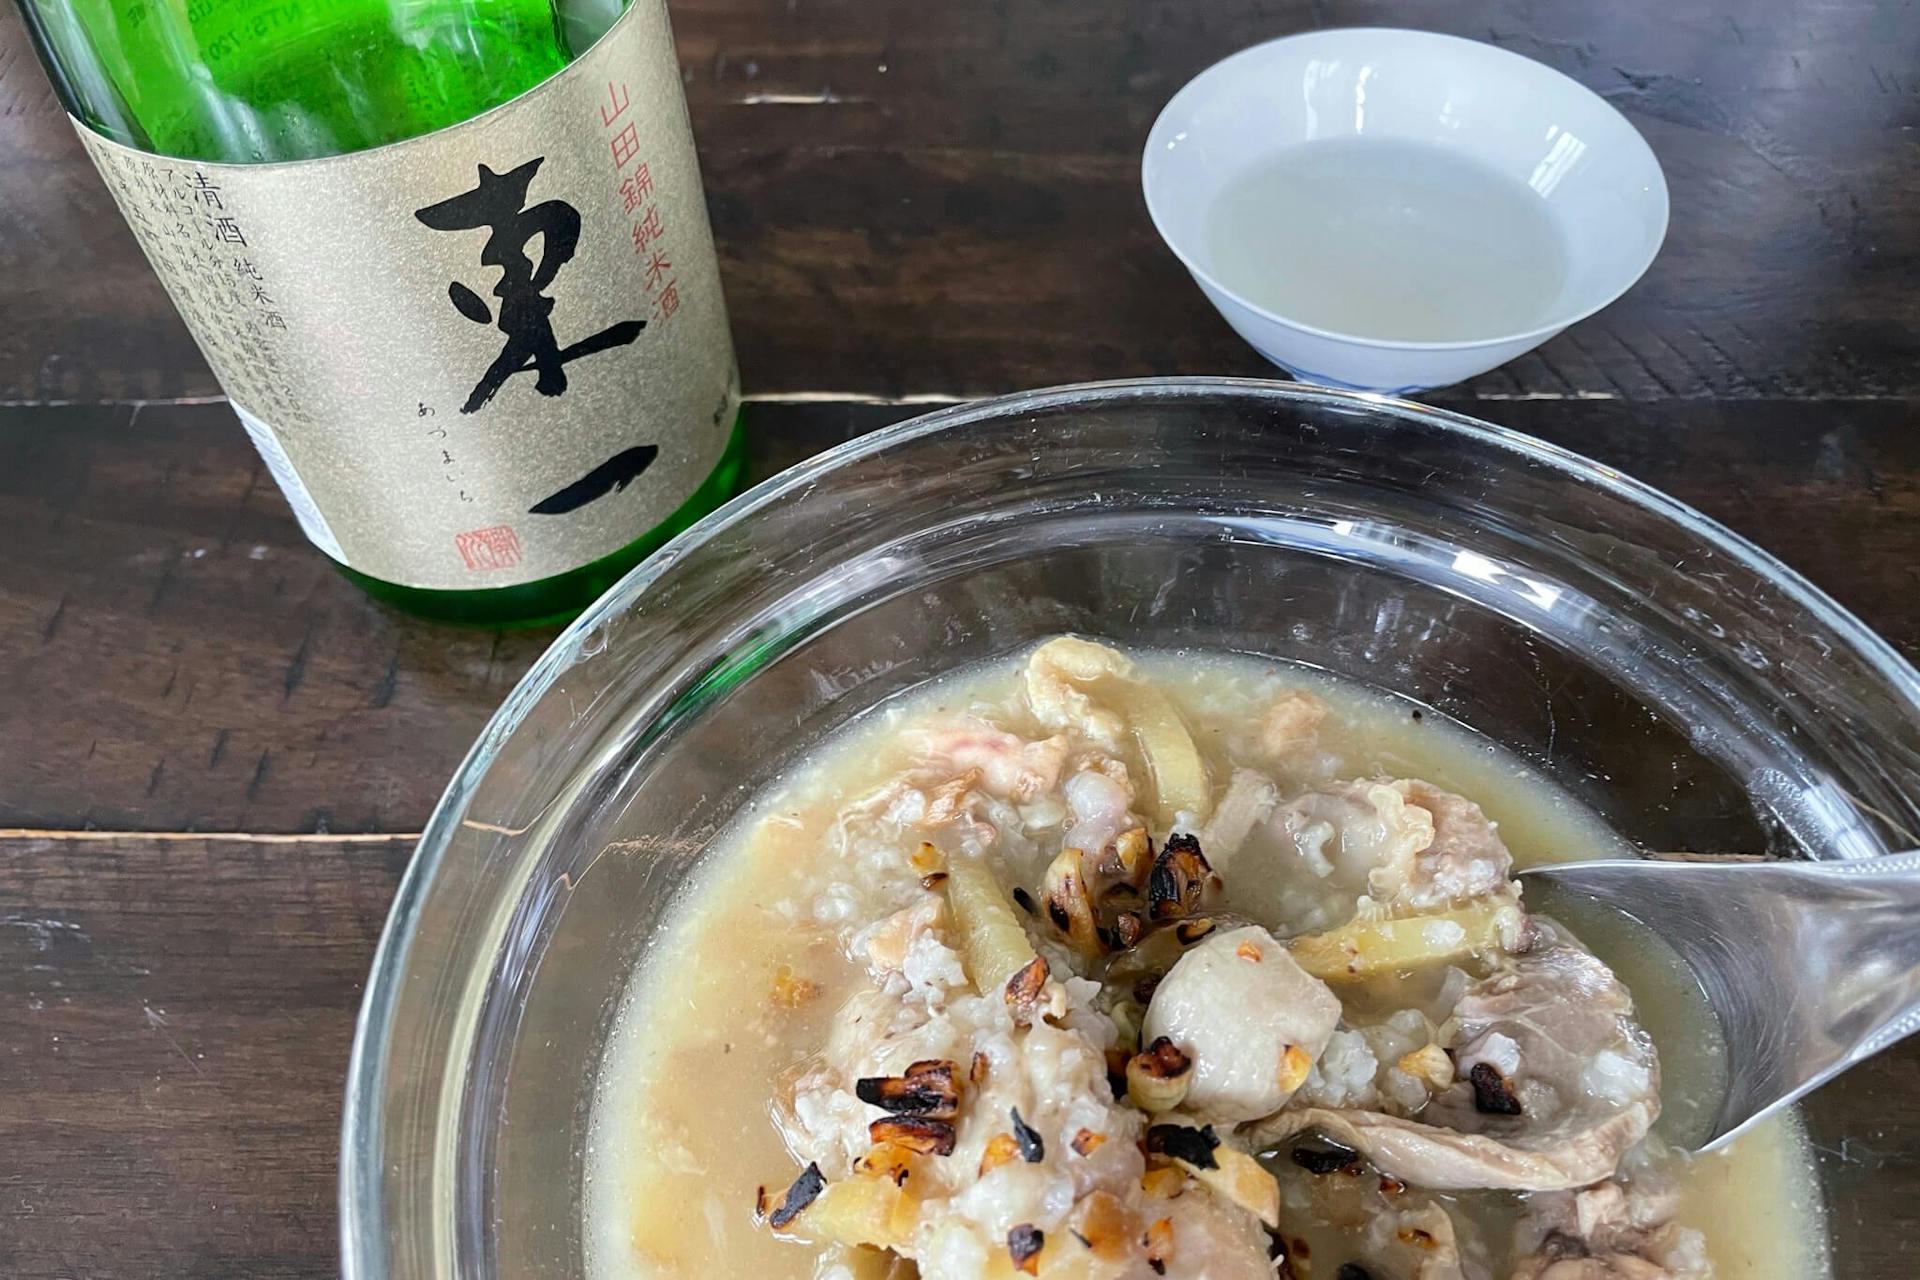 Kanzake (warm sake) with a type of rice porridge with chicken